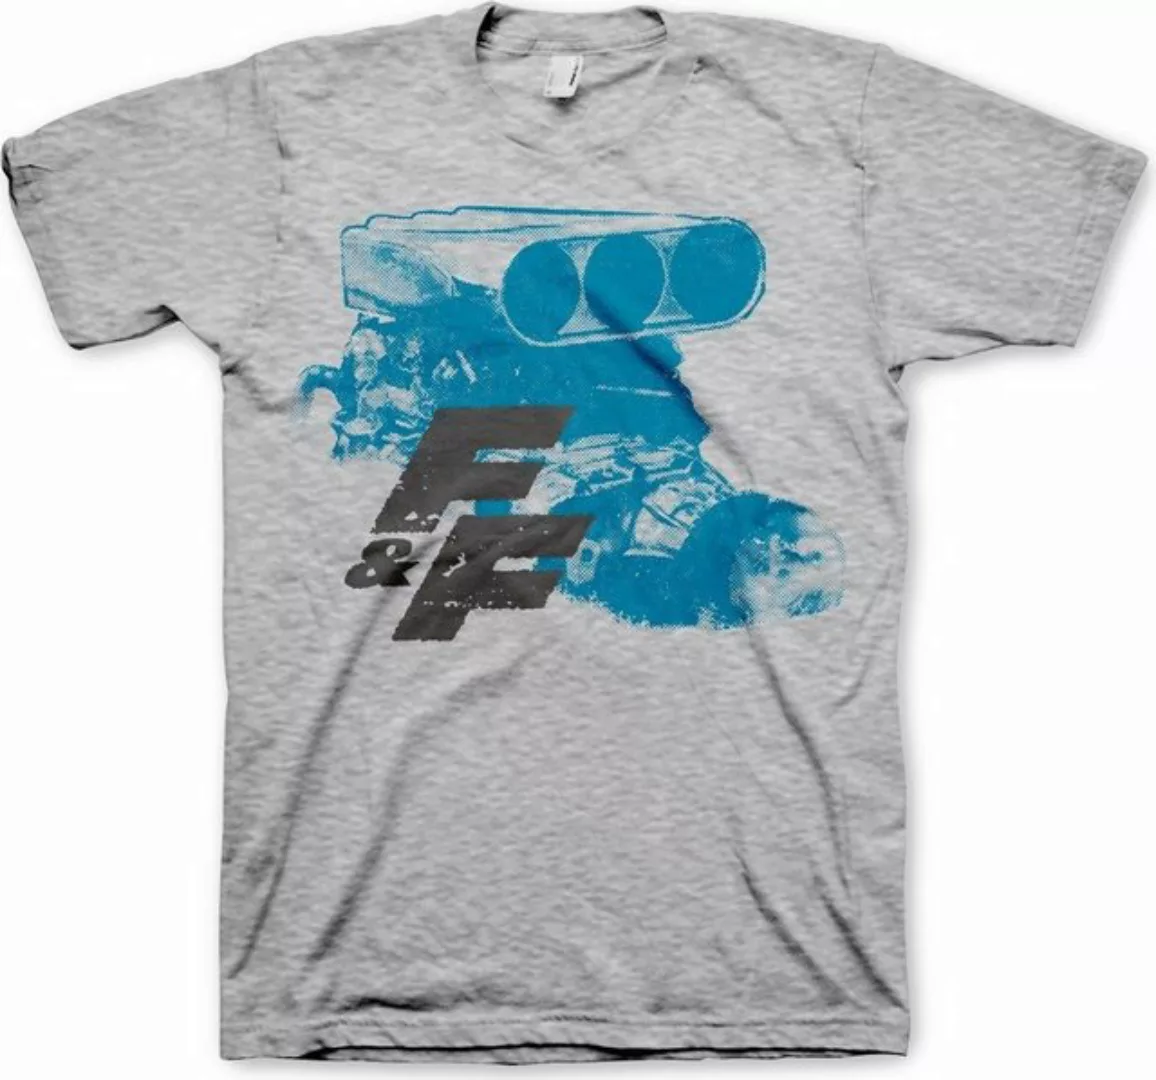 The Fast and the Furious T-Shirt günstig online kaufen